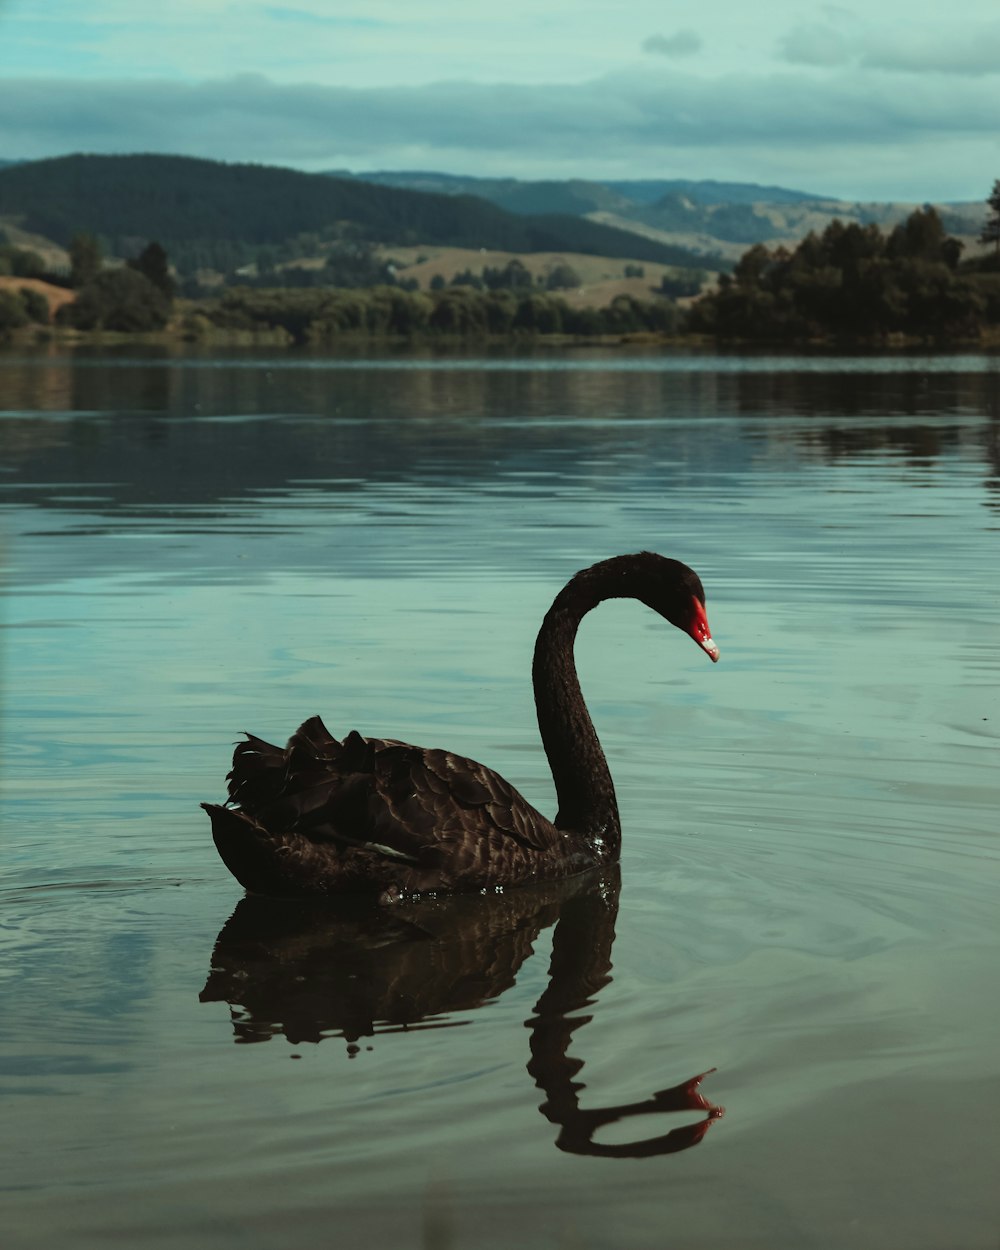 swan on water daytime photo – Free Bird Image on Unsplash